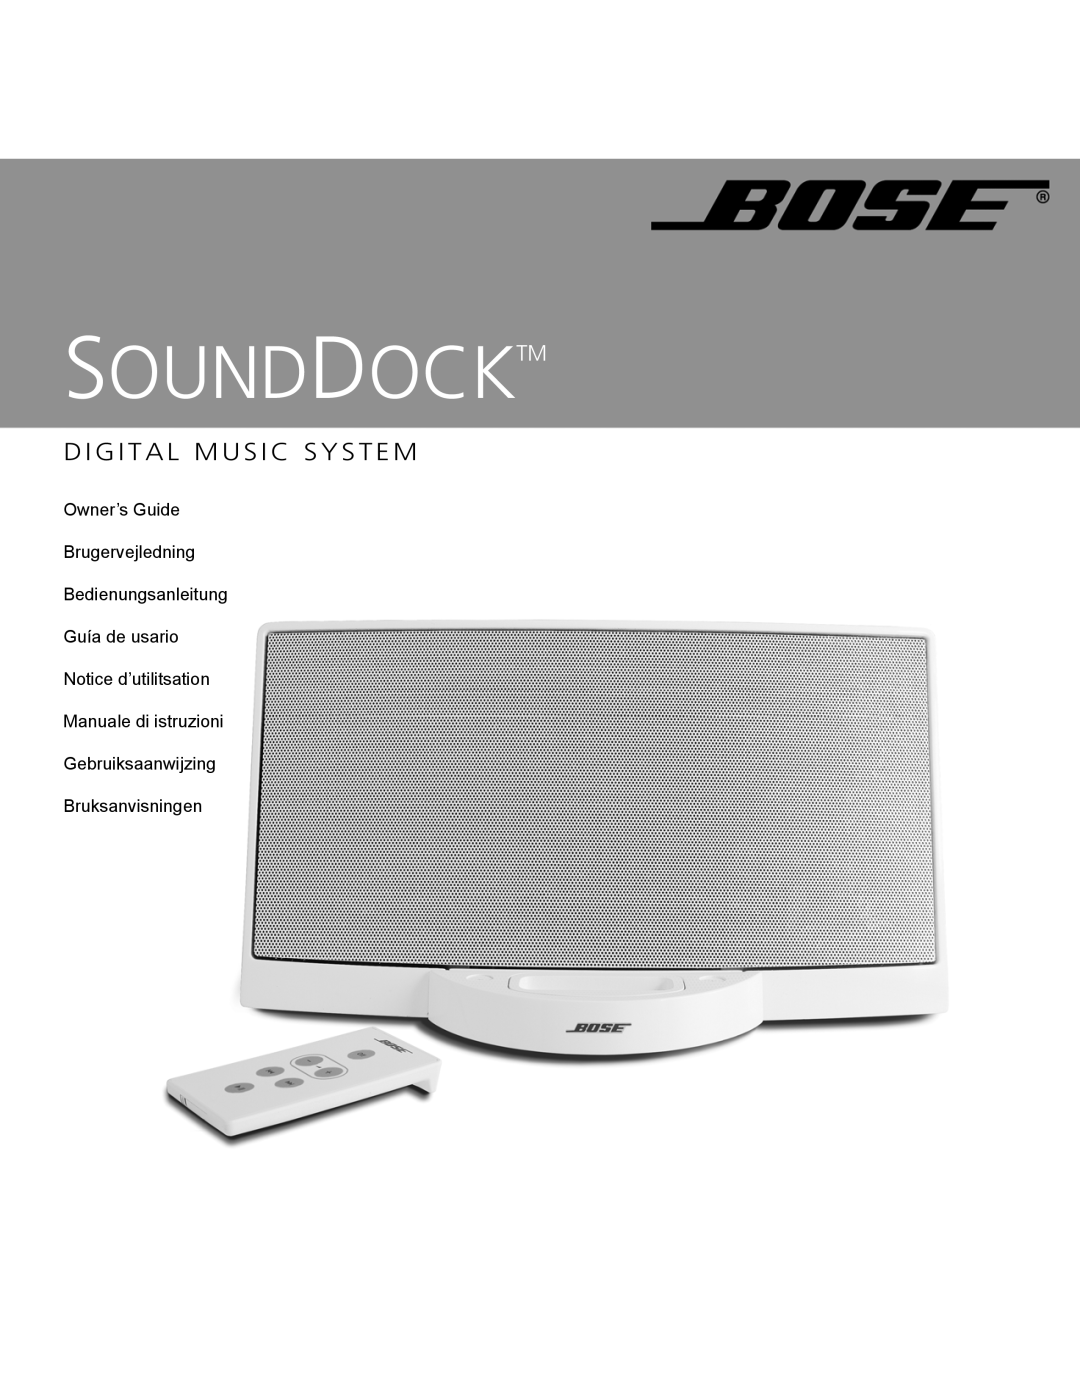 Bose SOUNDDOCKTM manual Sounddocktm, D I G I T A L M U S I C S Y S T E M 